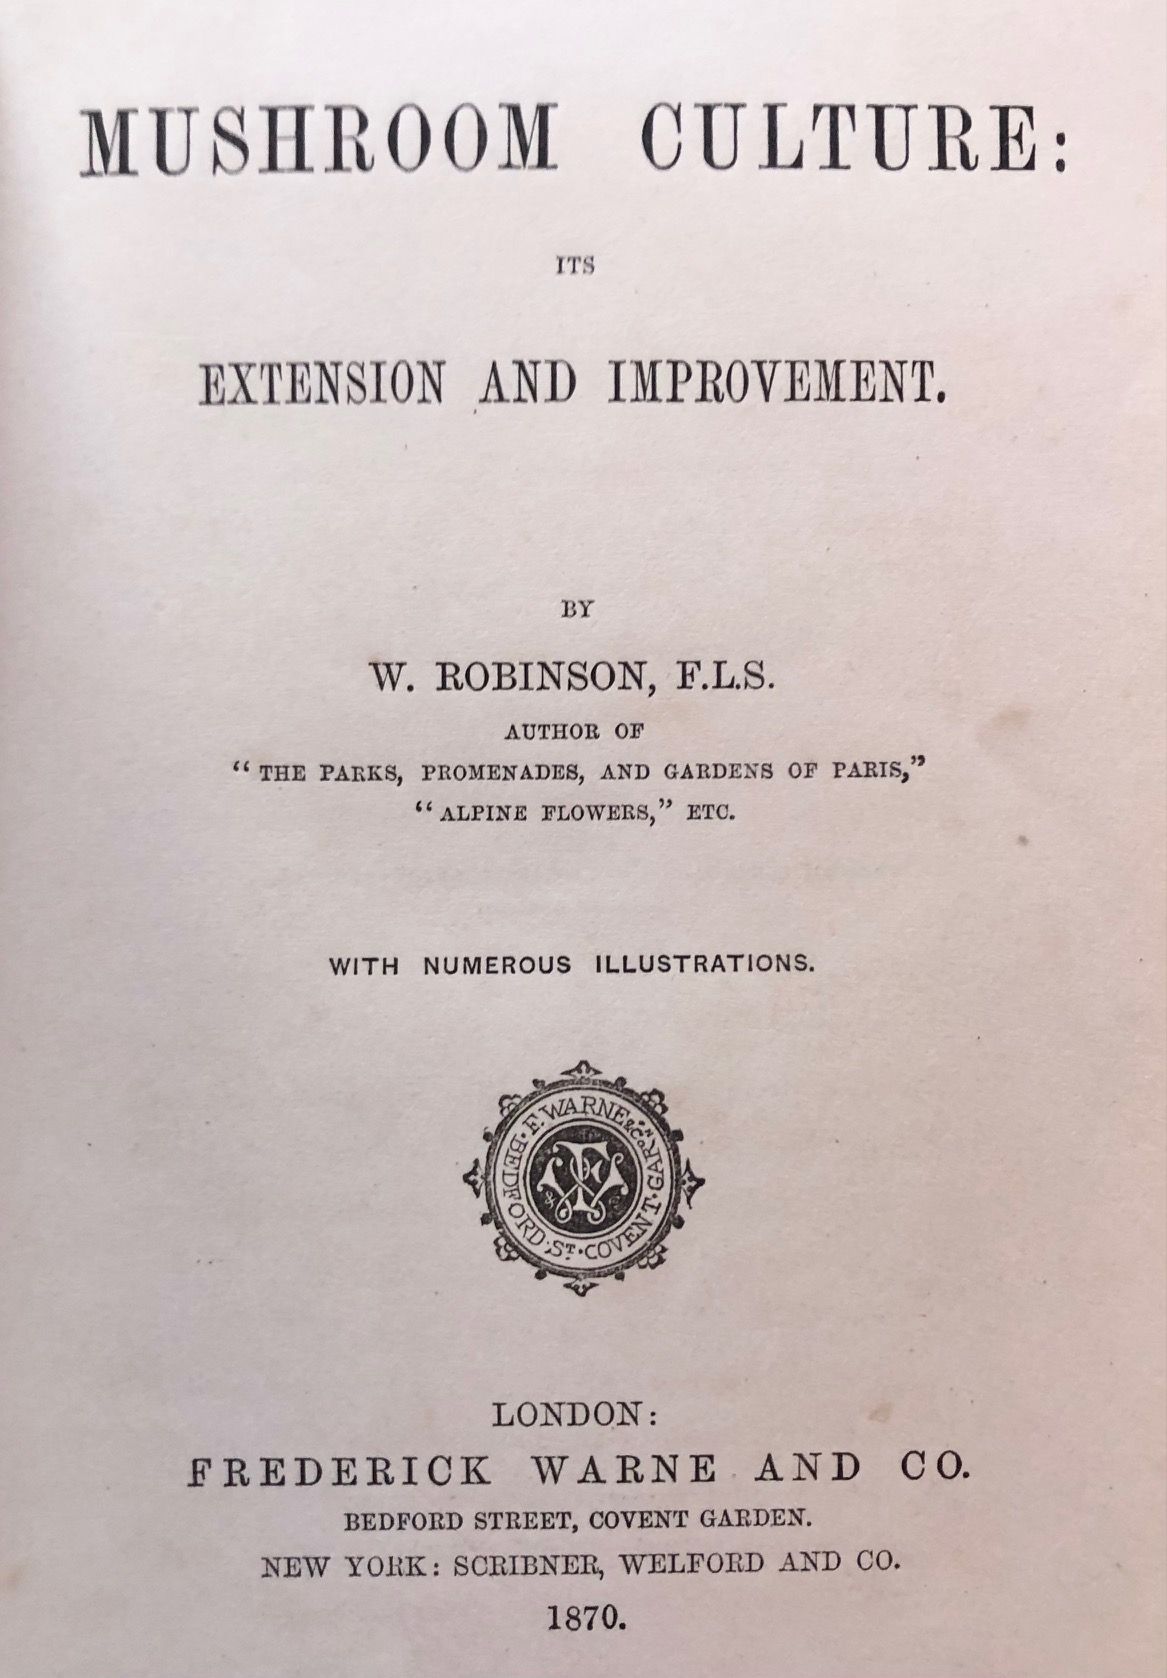 (Mushrooms) Robinson, W. Mushroom Culture: its Extension and Improvement.